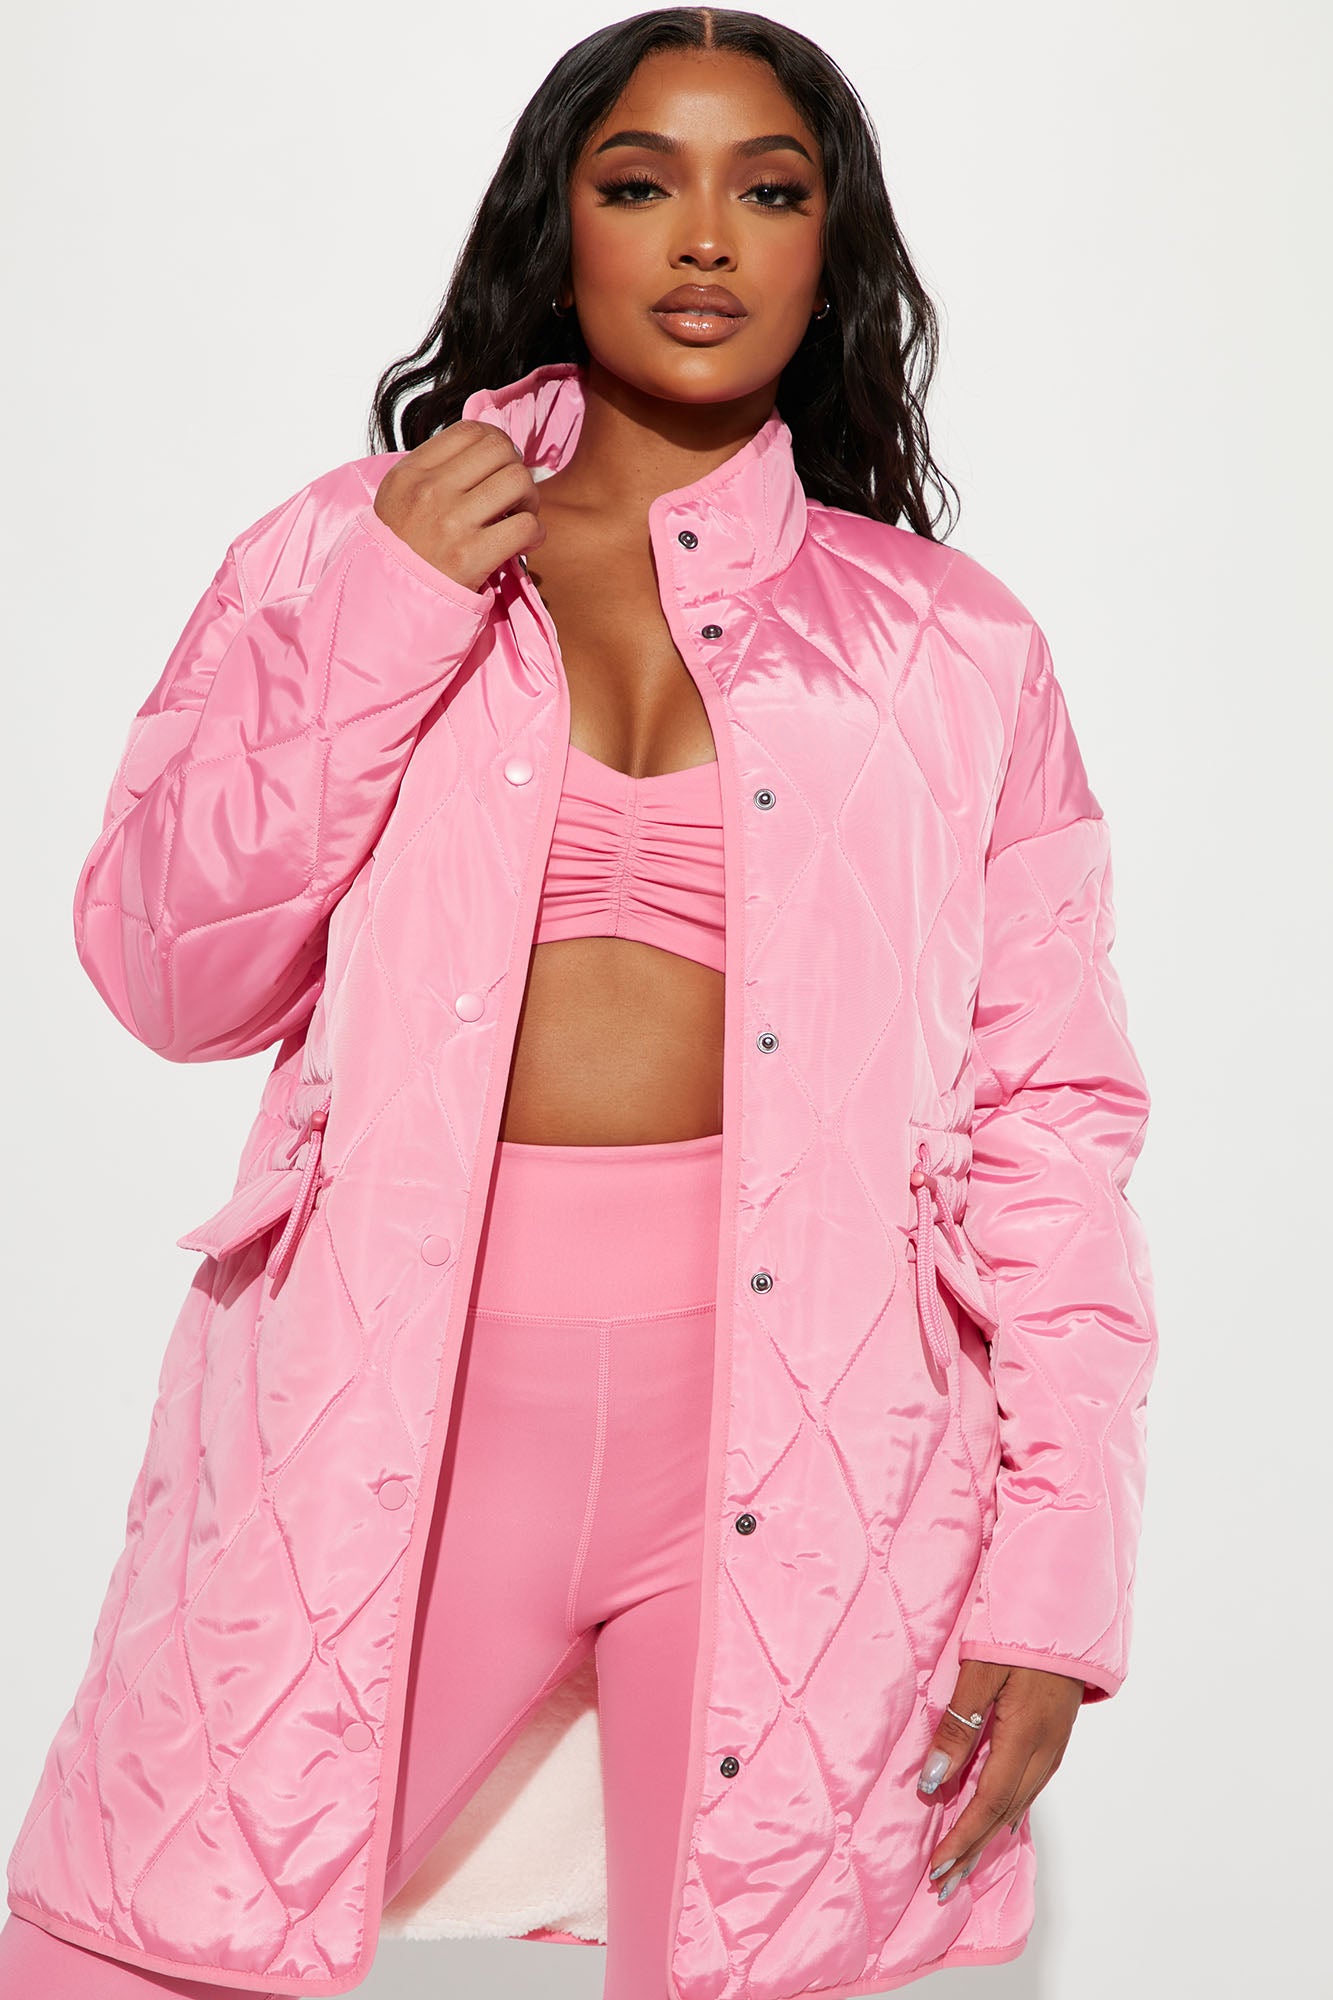 Saucer krigerisk Revisor In The Moment Quilted Jacket - Pink | Fashion Nova, Jackets & Coats |  Fashion Nova